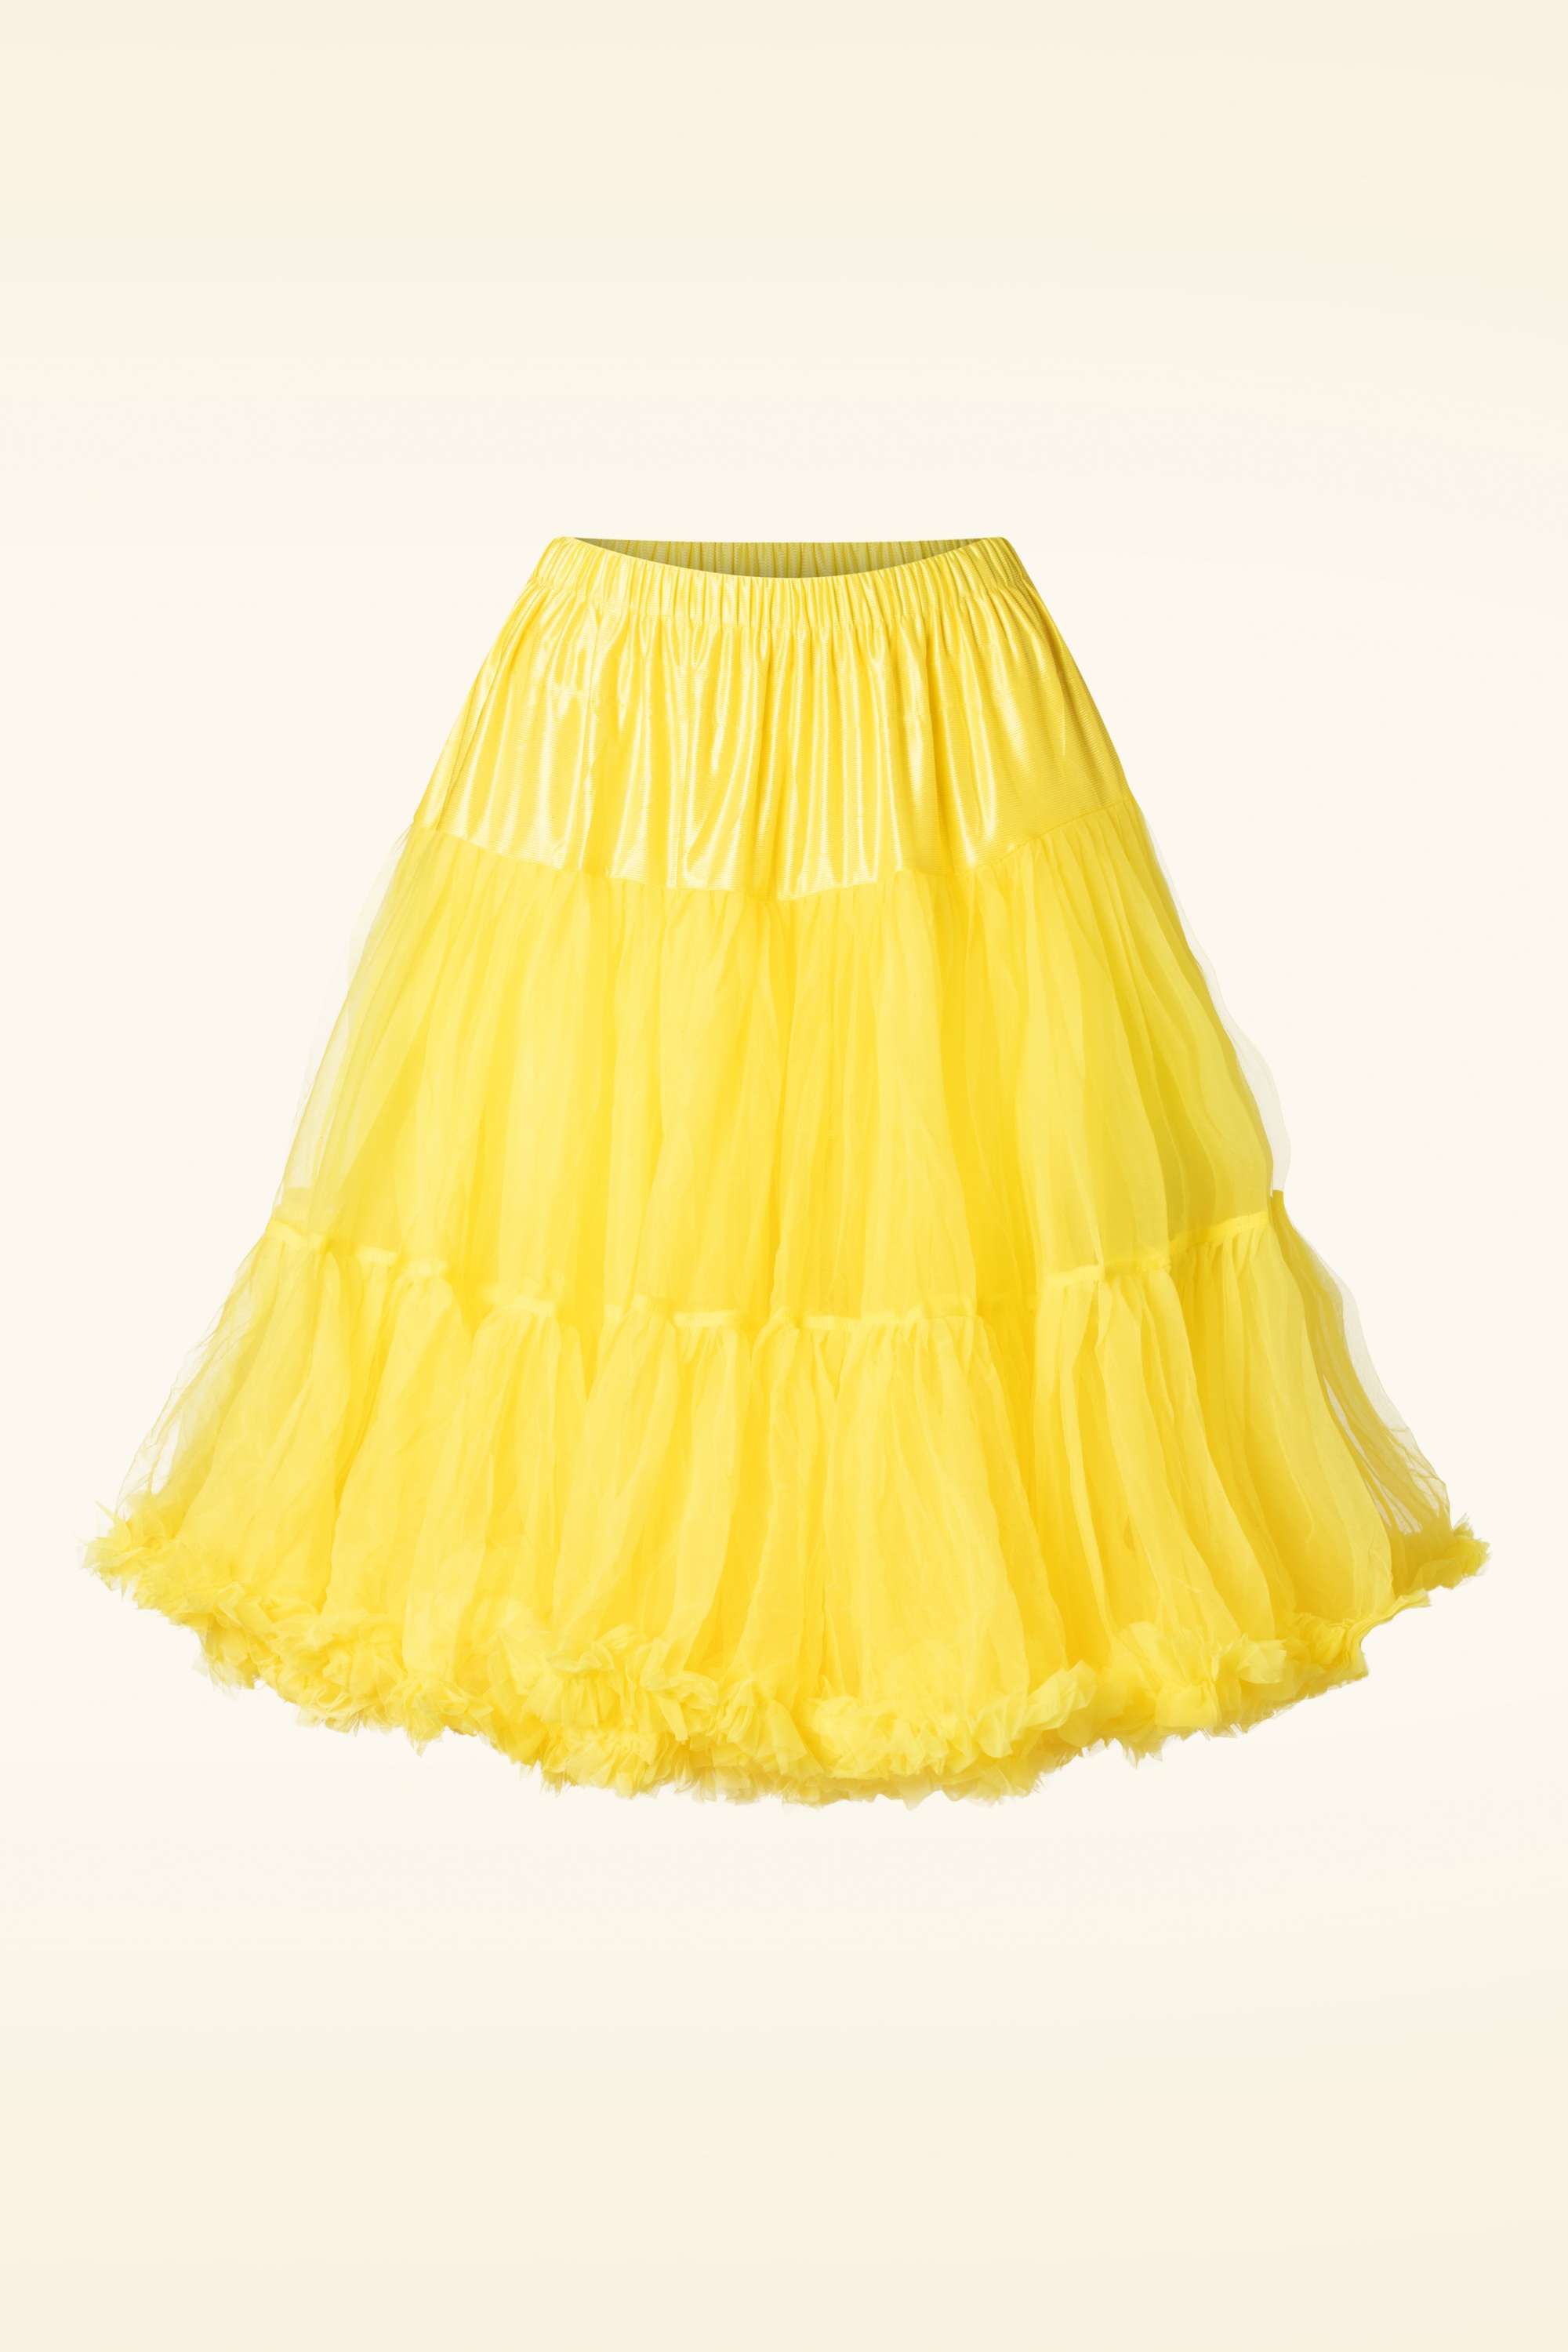 Banned Retro - Lola Lifeforms petticoat in geel